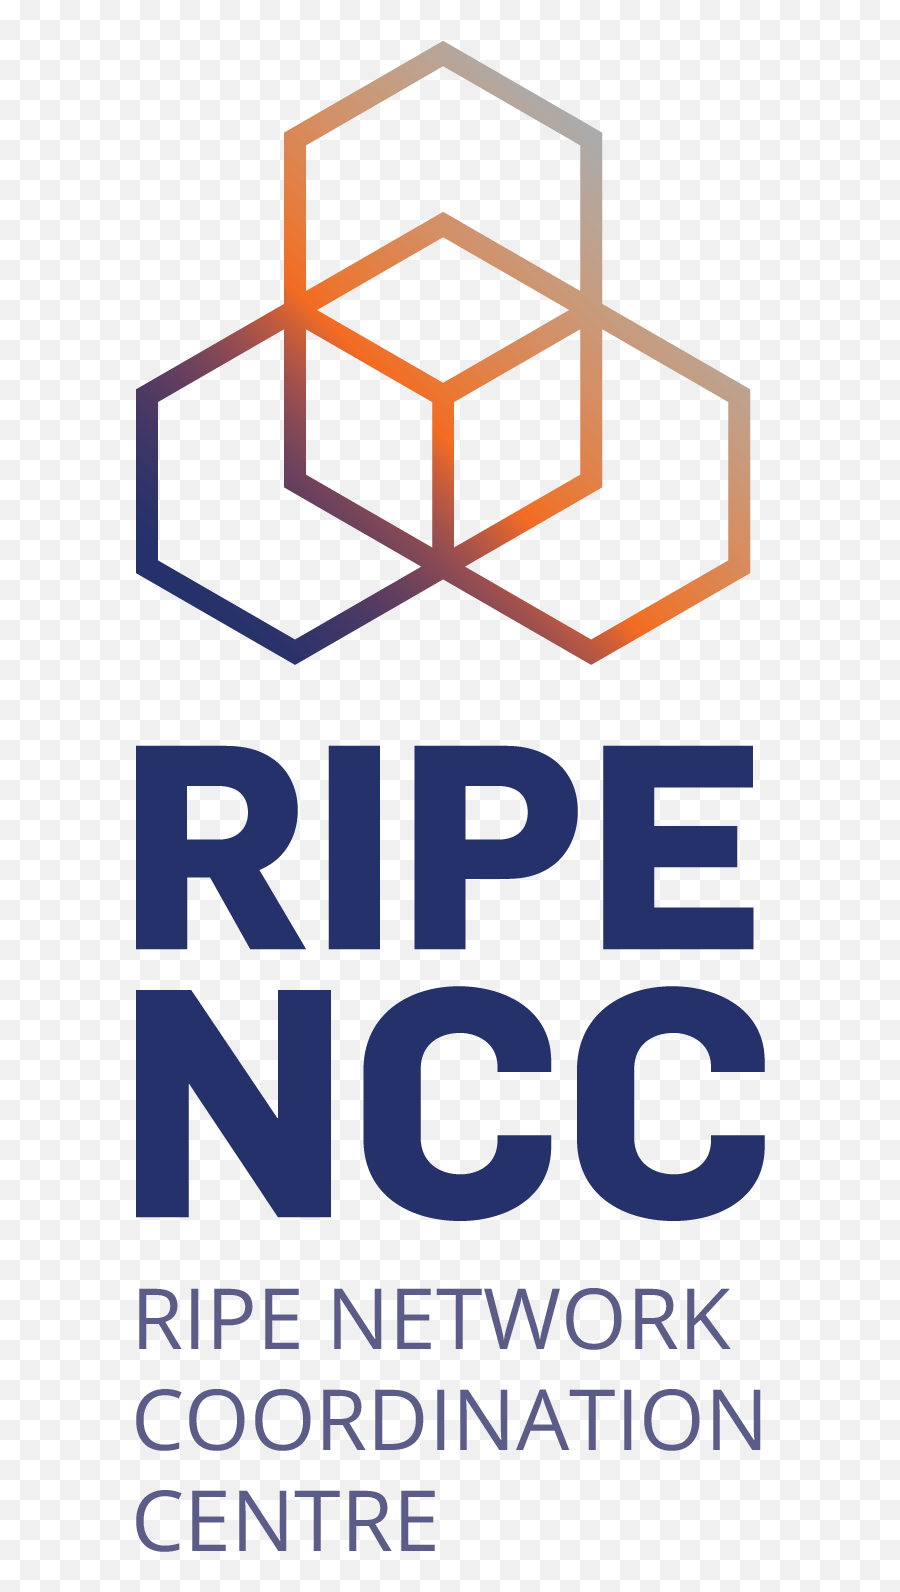 Ripe Ncc Logo U2014 Network Coordination Centre - Ripe Ncc Png,Internet Logos